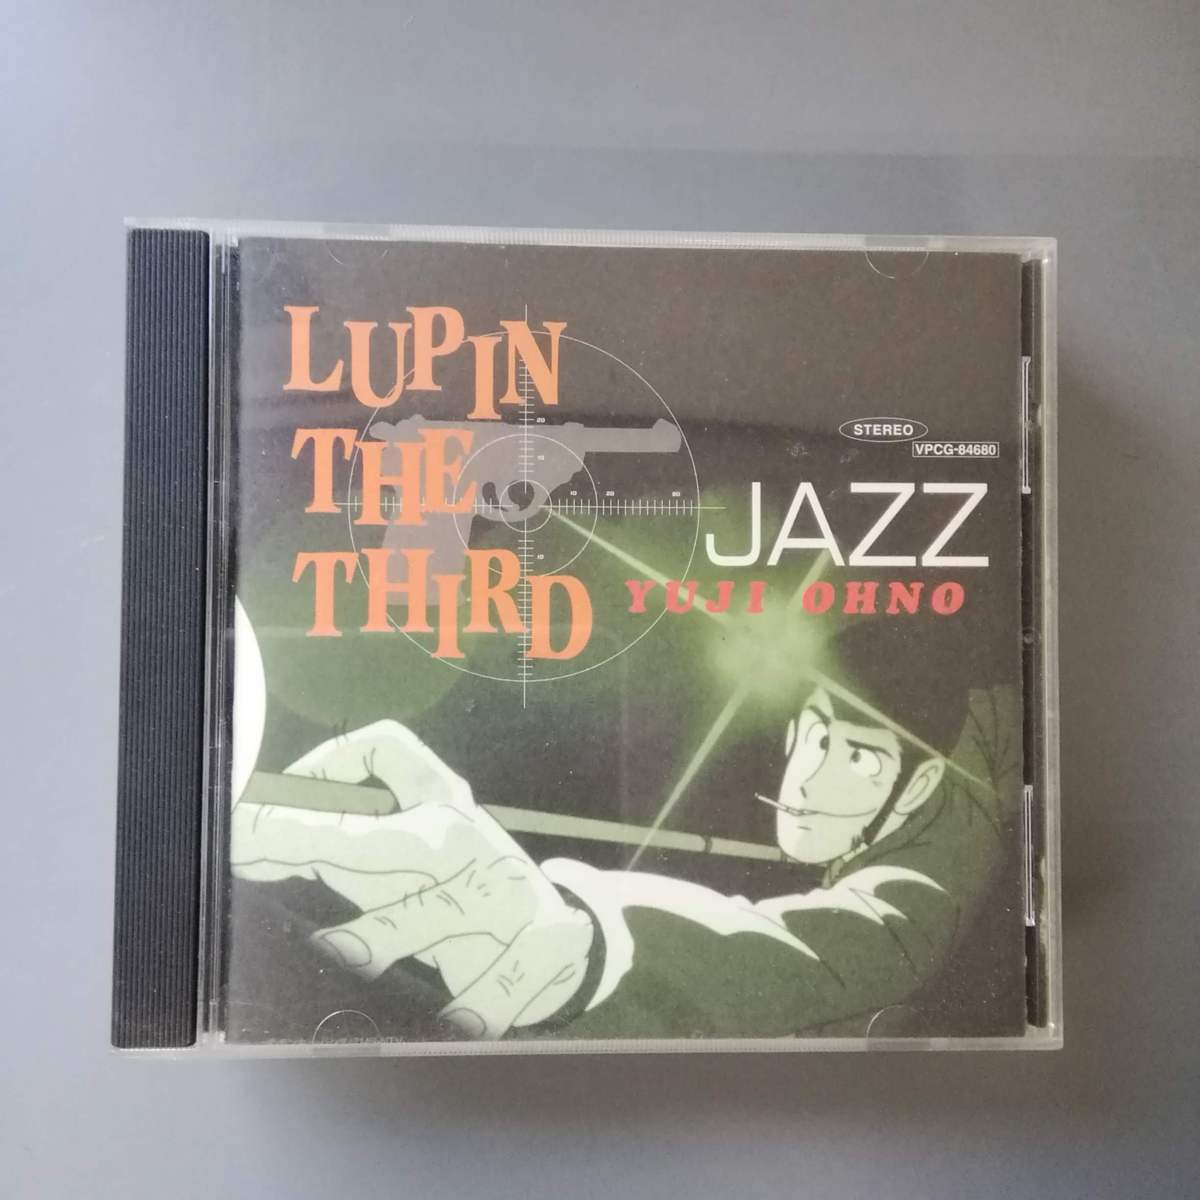 Lupin The Third Jazz ルパン三世 ジャズ 大野雄二 0125i Cd 売買されたオークション情報 Yahooの商品情報をアーカイブ公開 オークファン Aucfan Com